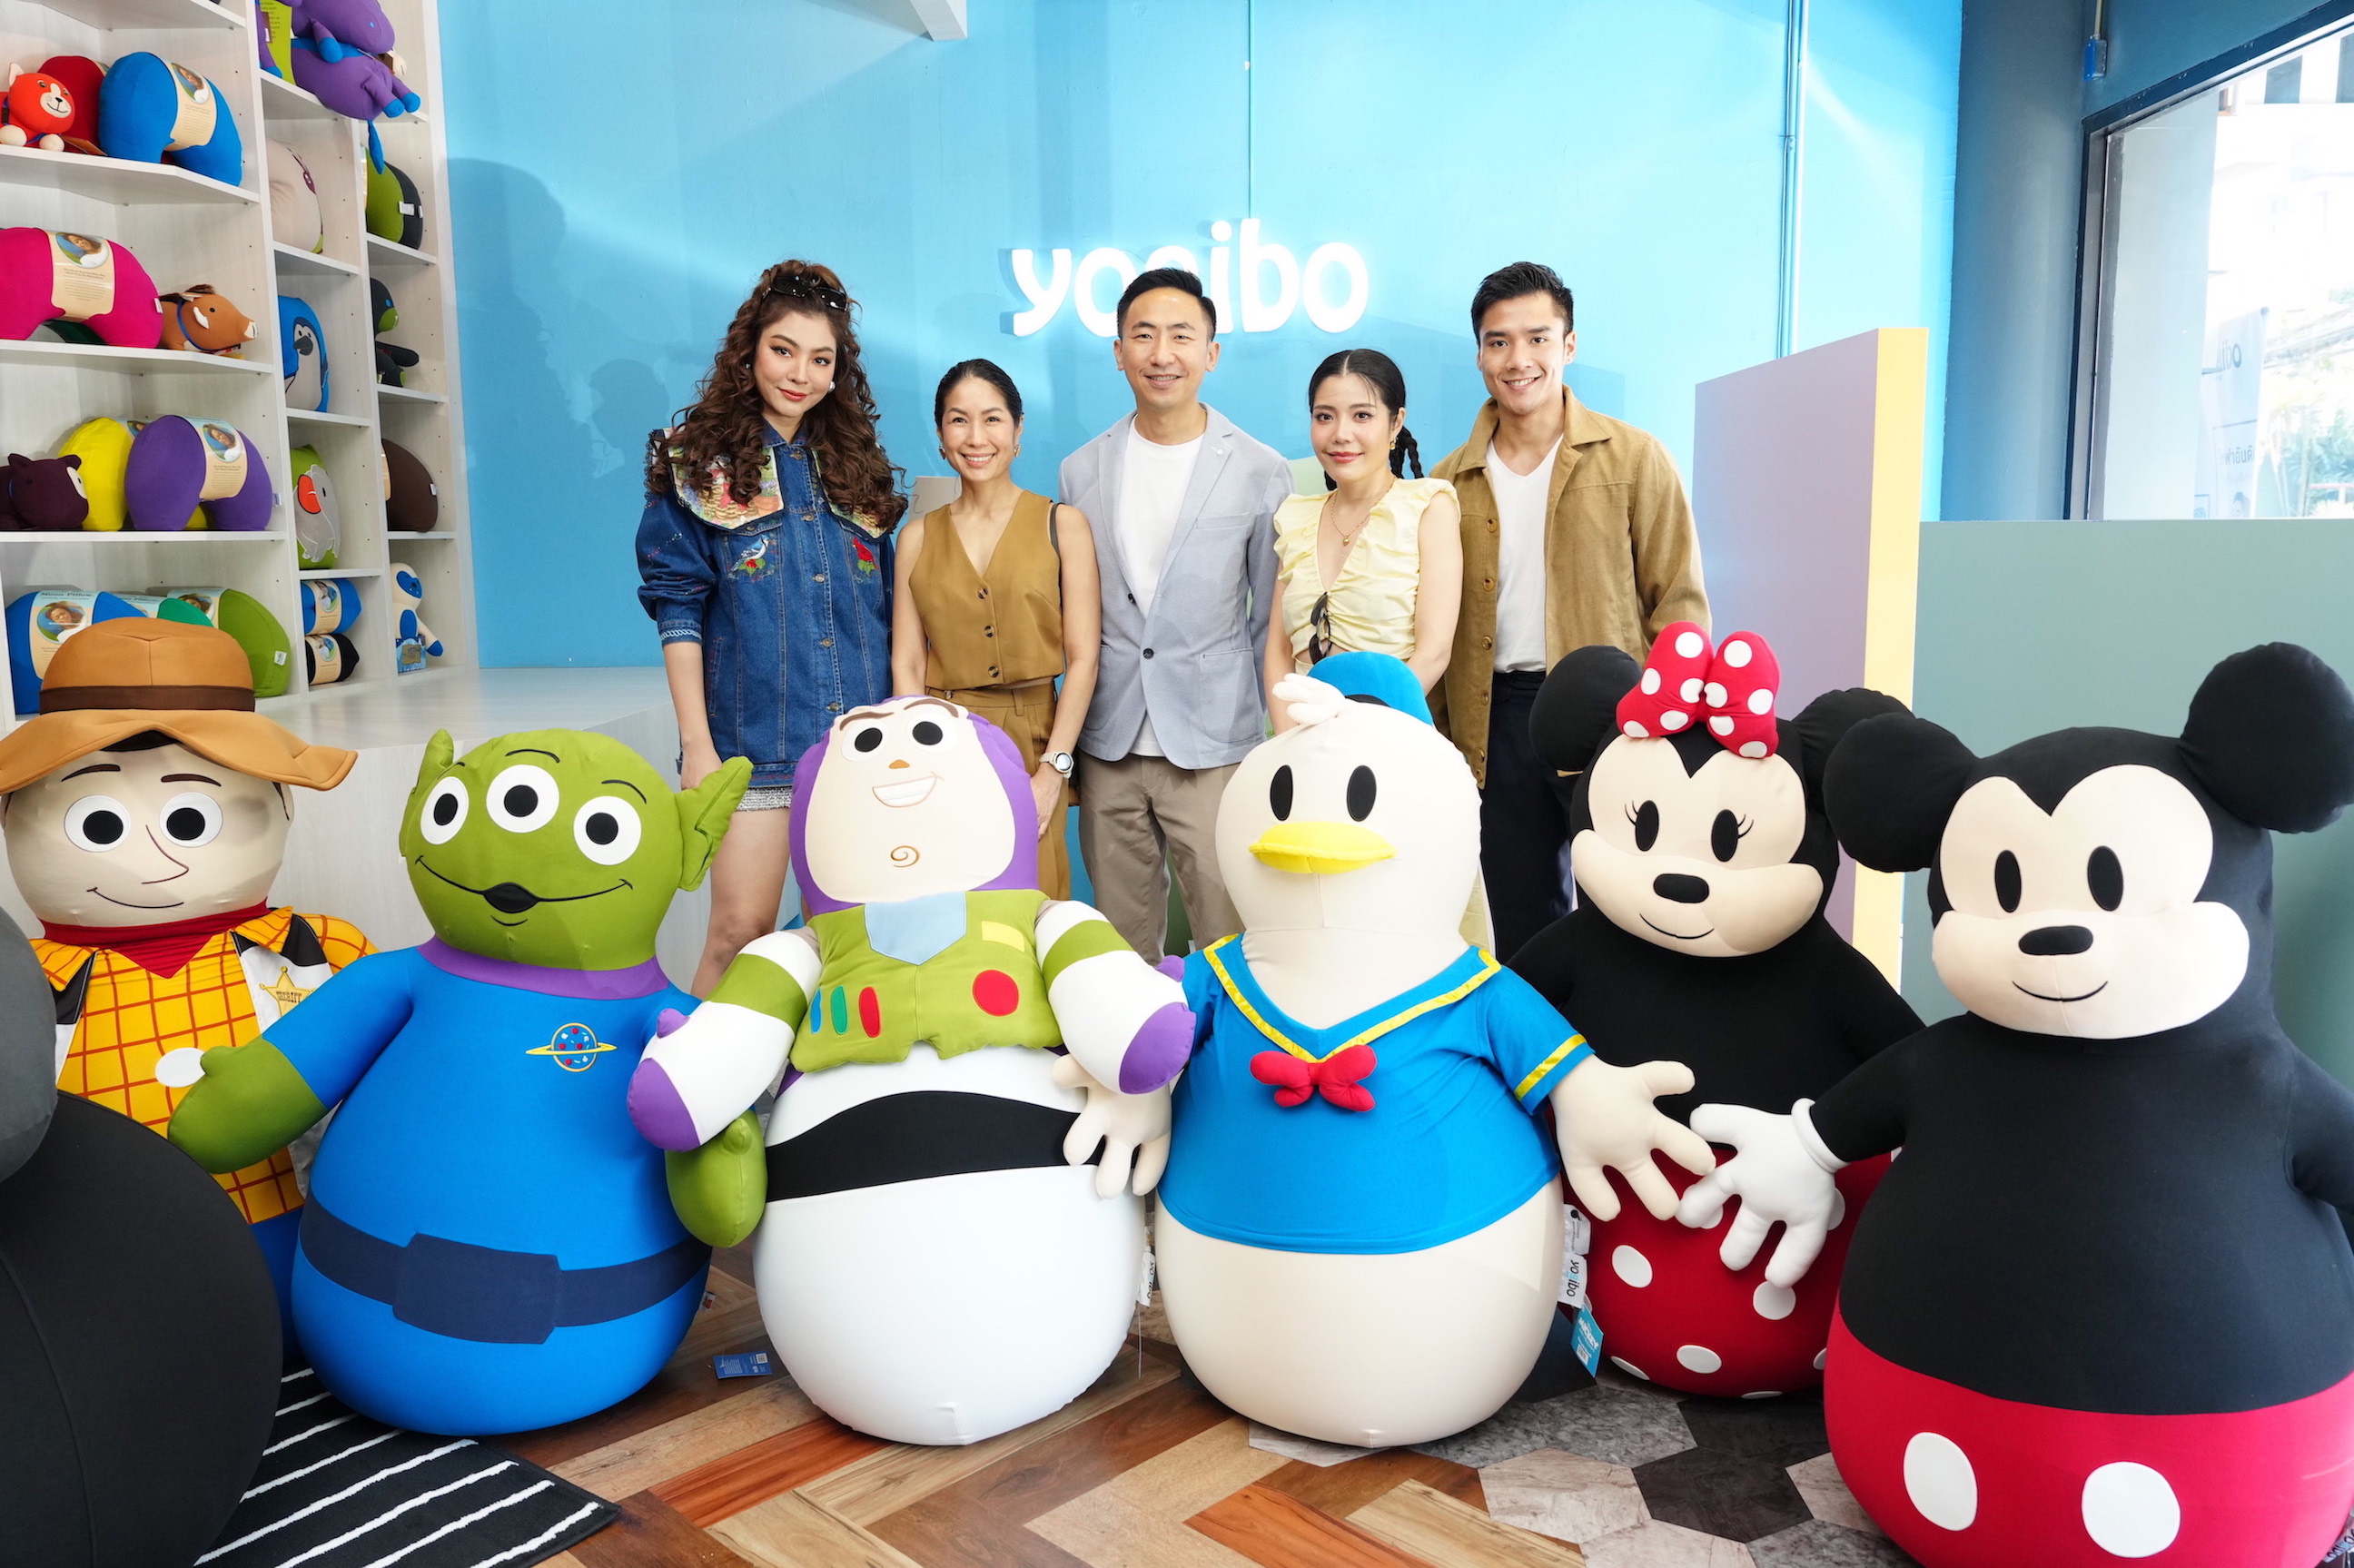 Yogibo (โยกิโบ) พรีเมี่ยมโซฟา แบรนด์ดังจากญี่ปุ่นสู่ไทย ชวนสัมผัสโฉมใหม่! Yogibo Flagship Store ทองหล่อ 13 ที่สุดแห่งความนุ่มสบายอย่างมีสไตล์ พร้อมเปิดตัวคอลเลคชั่นใหม่ล่าสุด “Yogibo Disney Mickey & Friends และ Disney Pixar Toy Story”